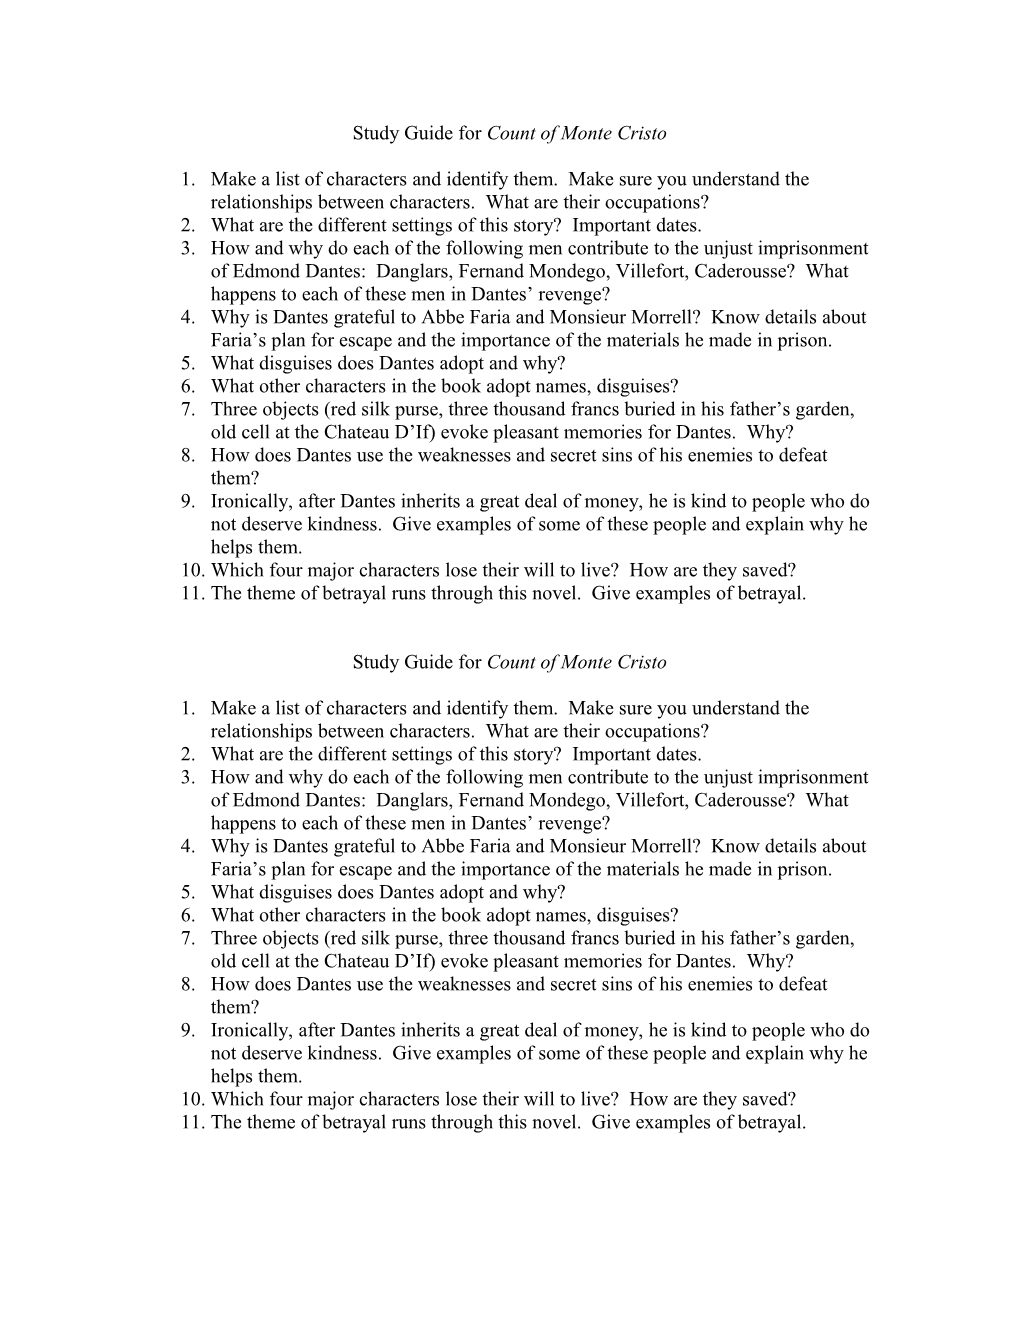 Study Guide for Count of Monte Cristo